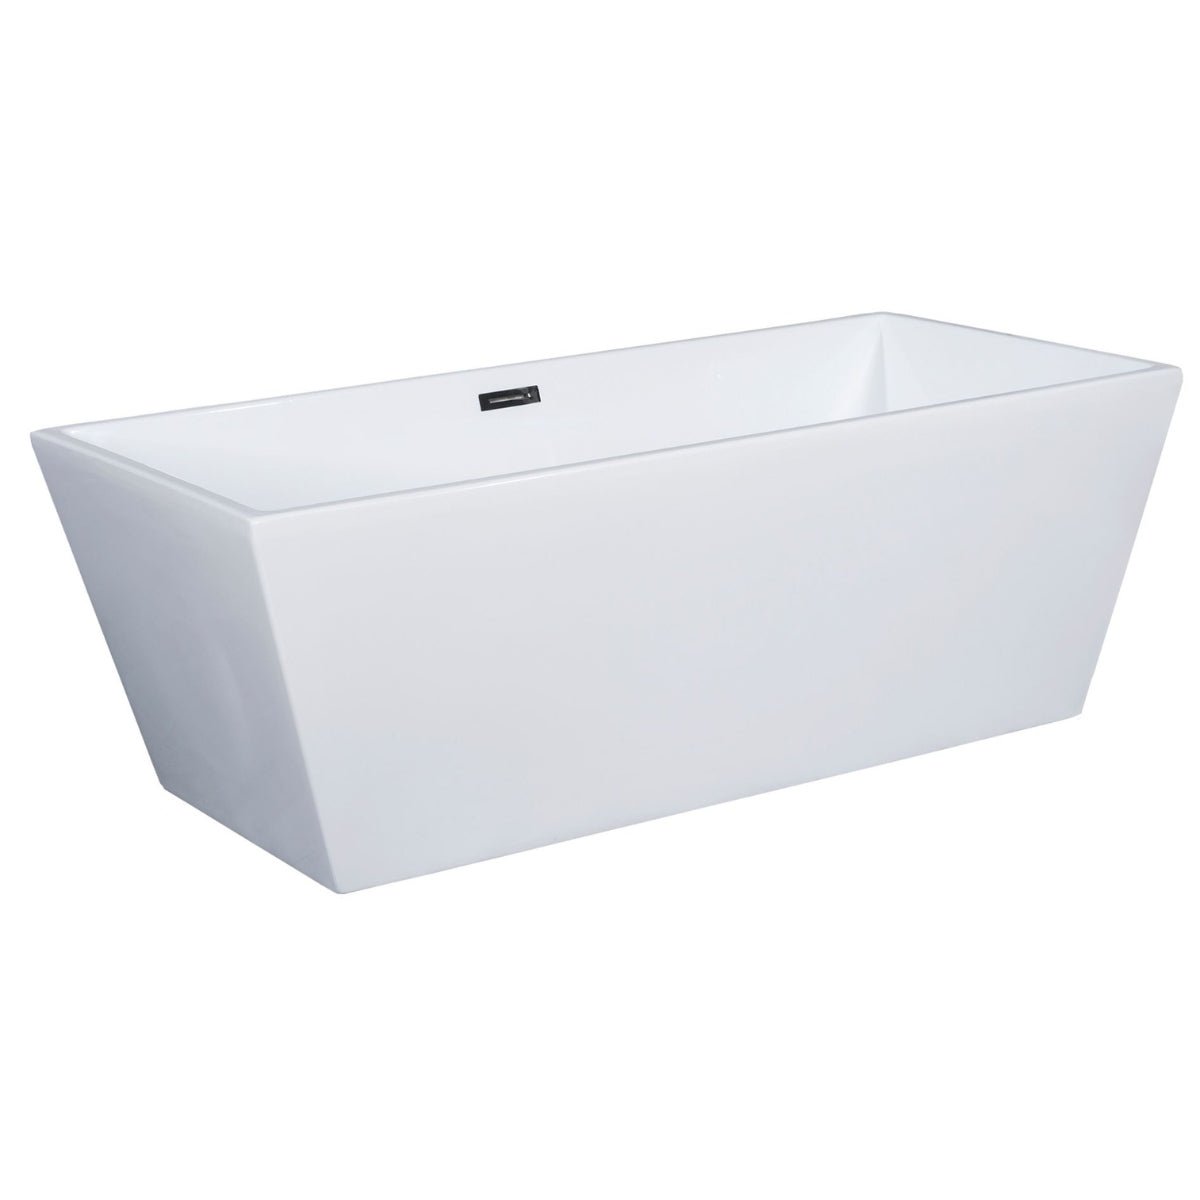 ALFI brand AB8833 59 Inch White Rectangular Bathtub - Elite Vitality